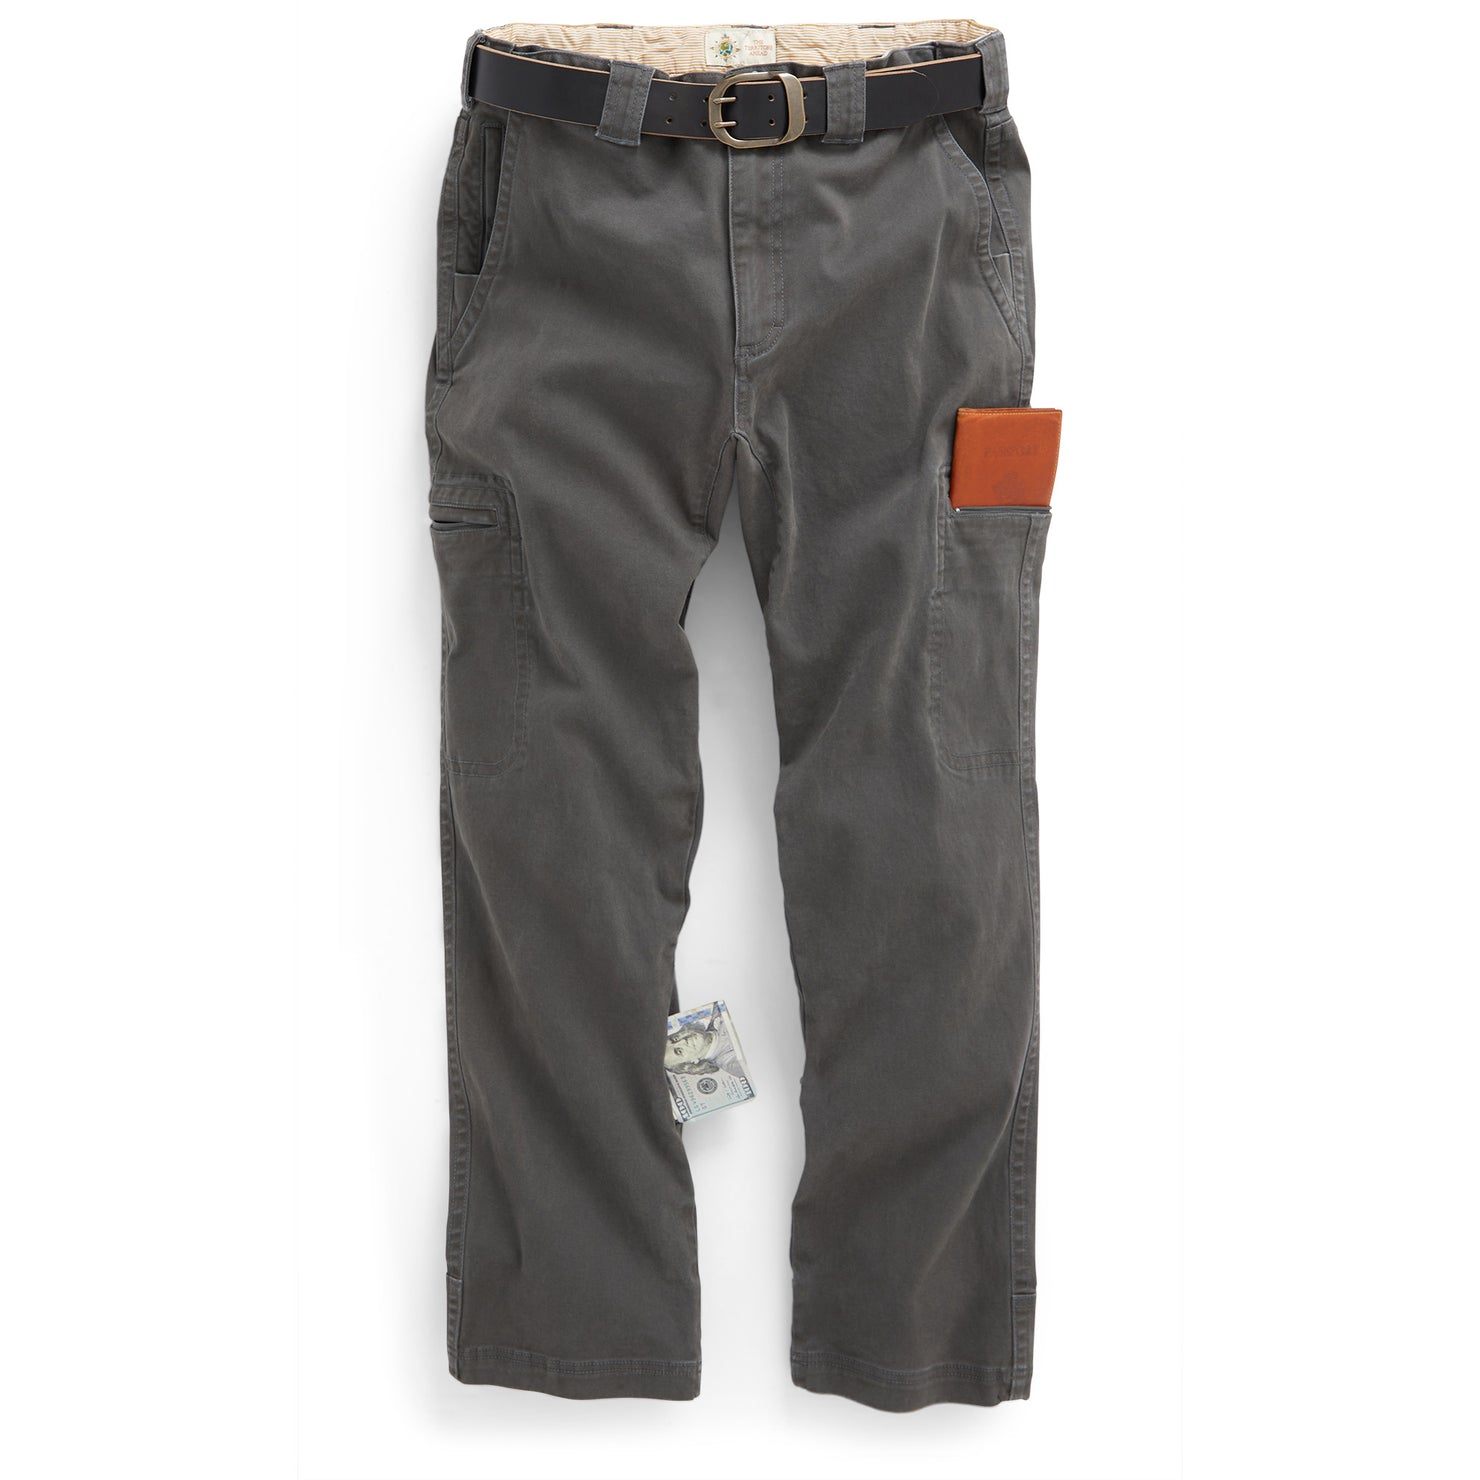 Mission Comfort Cargo Pants – The J. Peterman Company